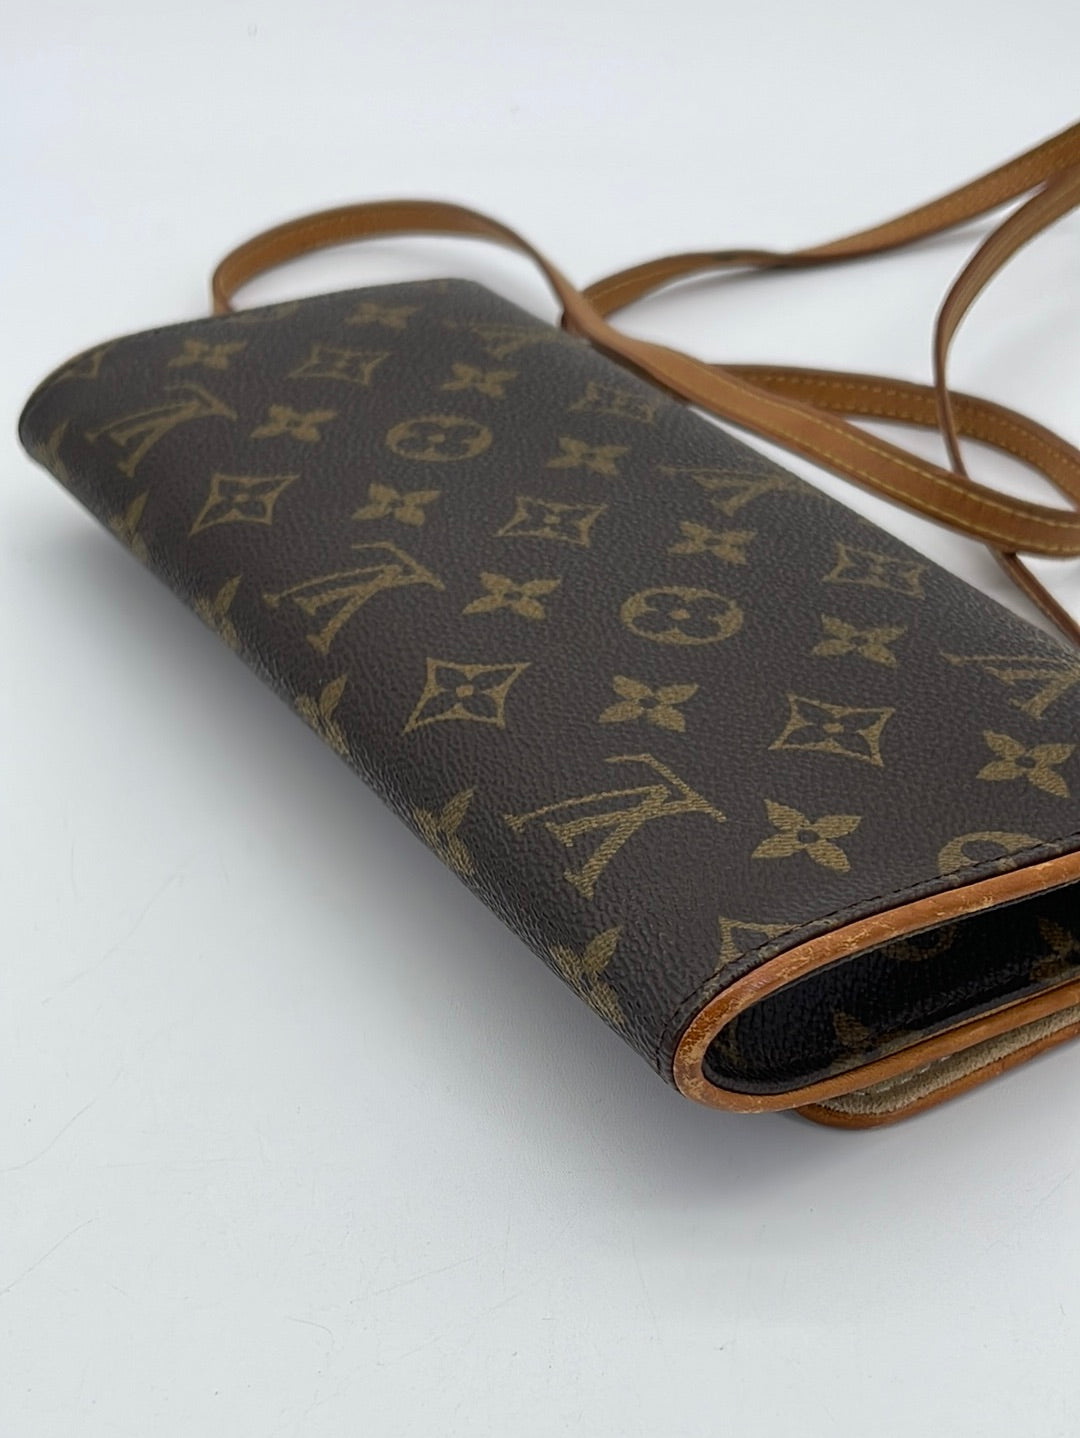 PRELOVED Louis Vuitton Discontinued Pochette Twin GM Monogram Crossbody Bag R7TT89J 041224 H